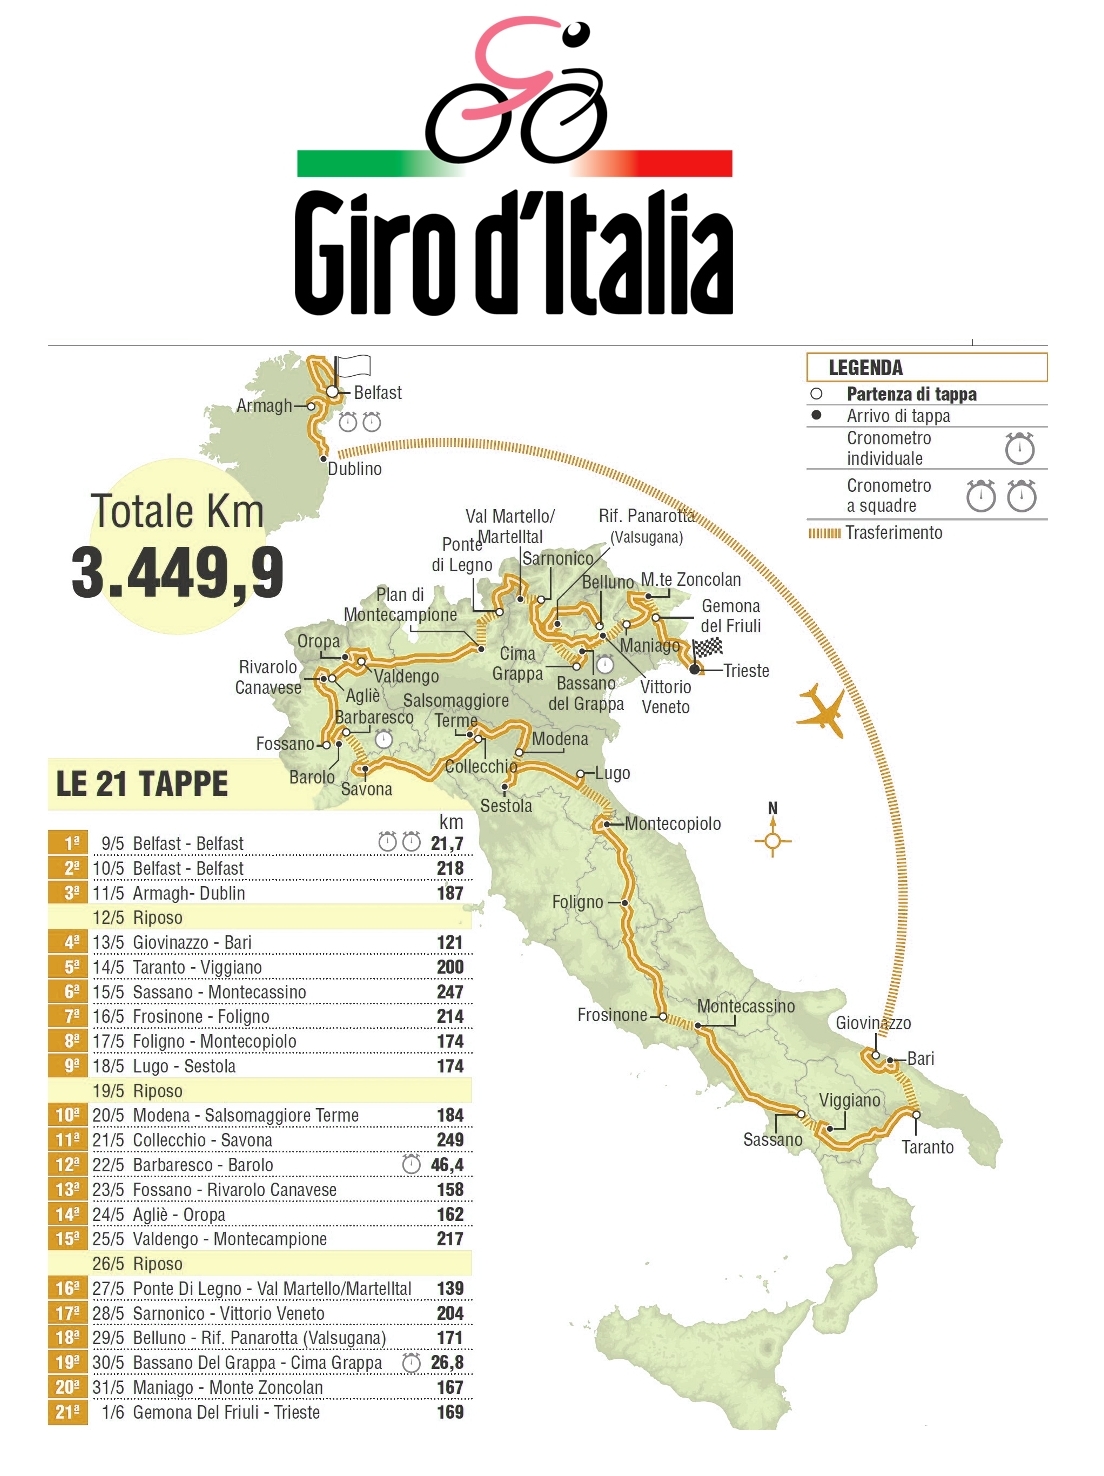 http://www.net4info.de/photos/cpg/albums/userpics/10002/Giro_d_Italia_logo.jpg